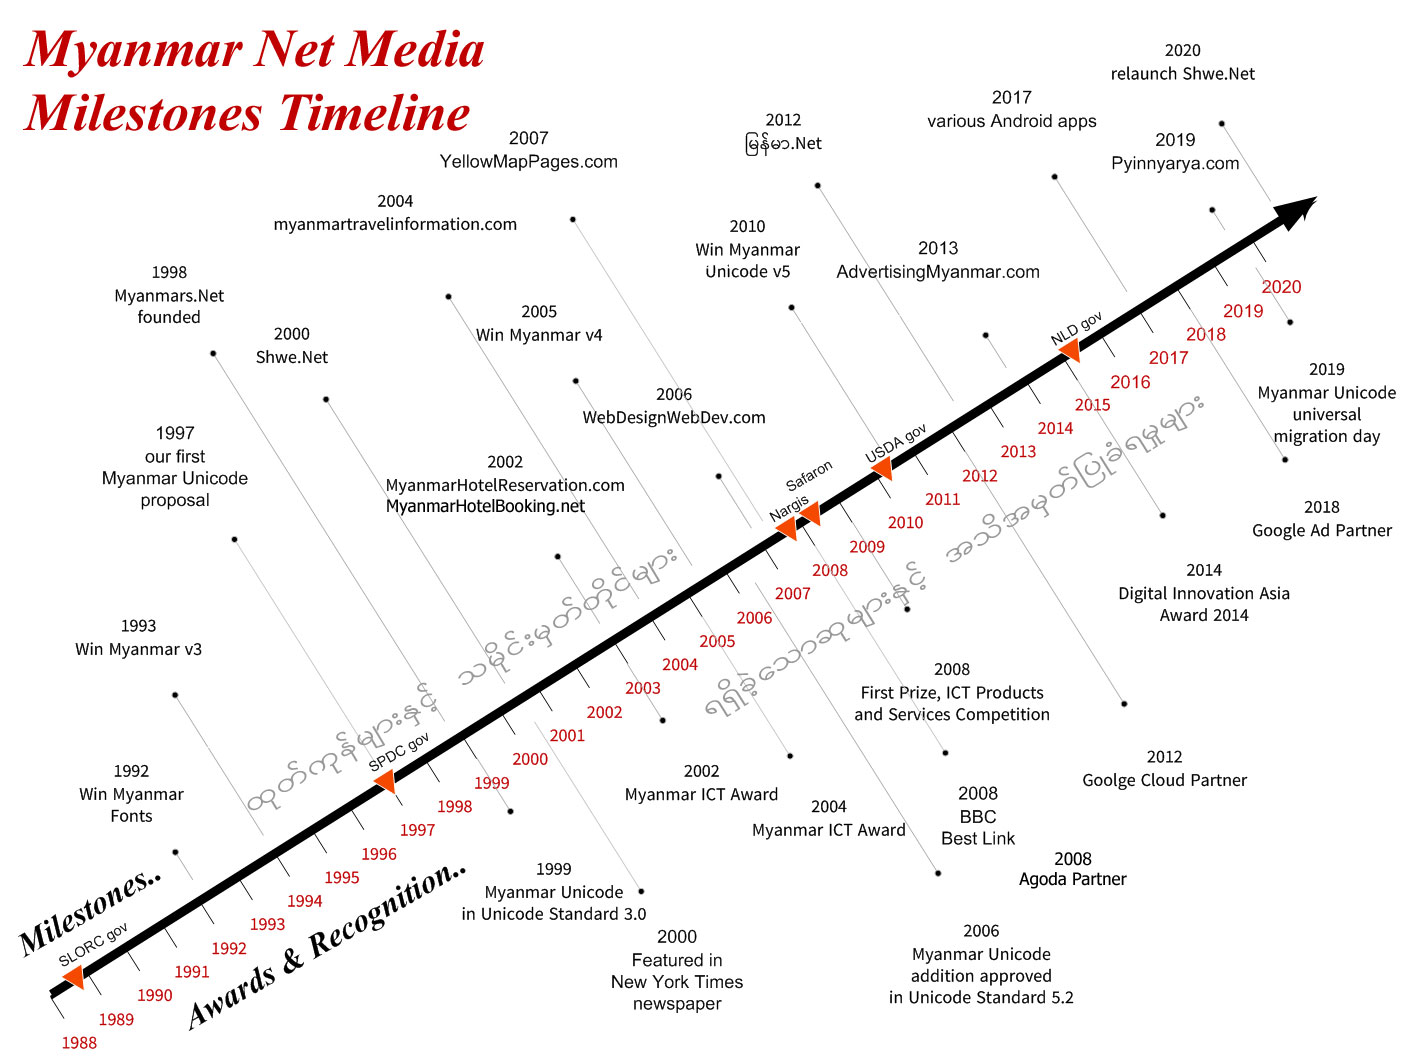 Myanmar Net Media historical milestones and timeline